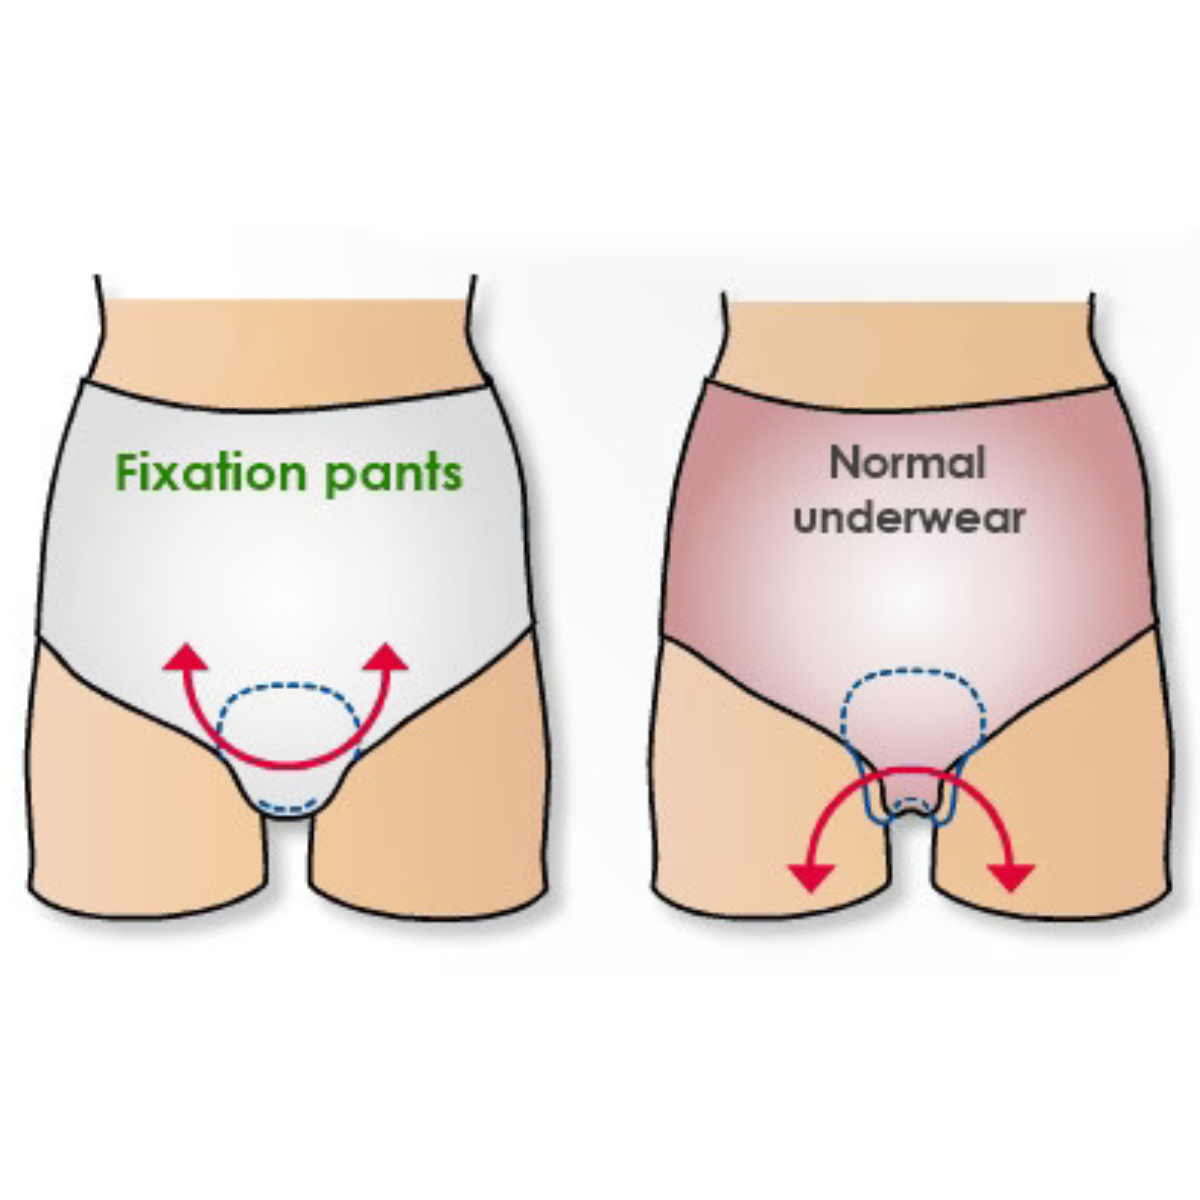 Nateen mesh pants unisex fixation underwear for pads, Fixation Underwear  for Pads, Adult Incontinence